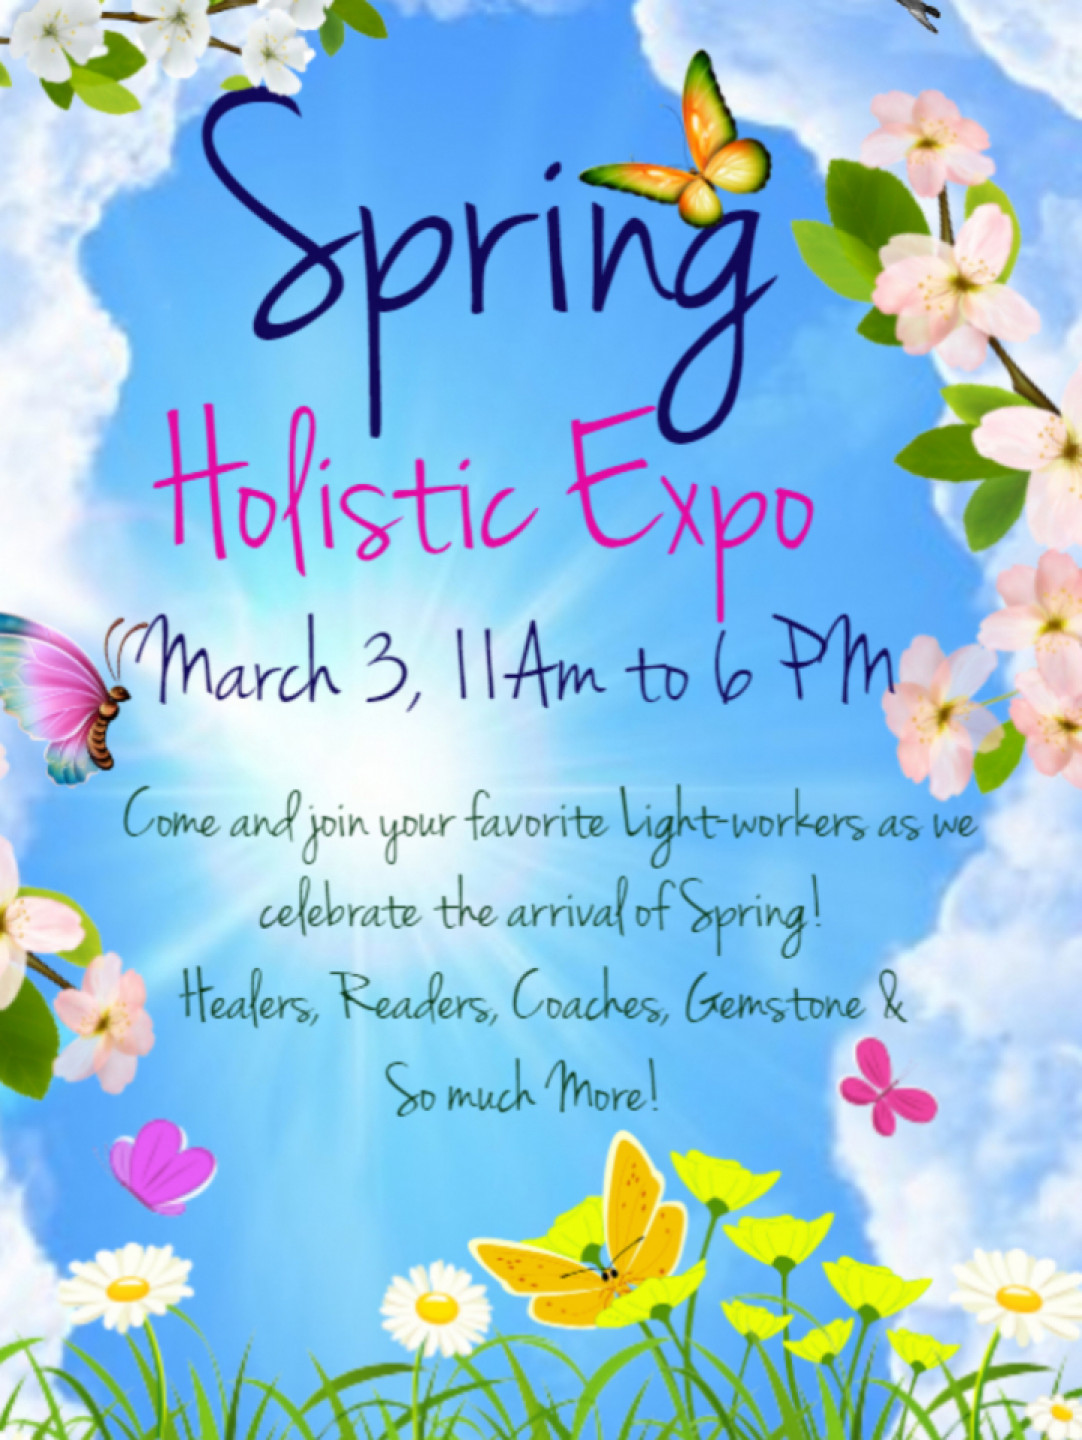 Spring Holistic Expo 